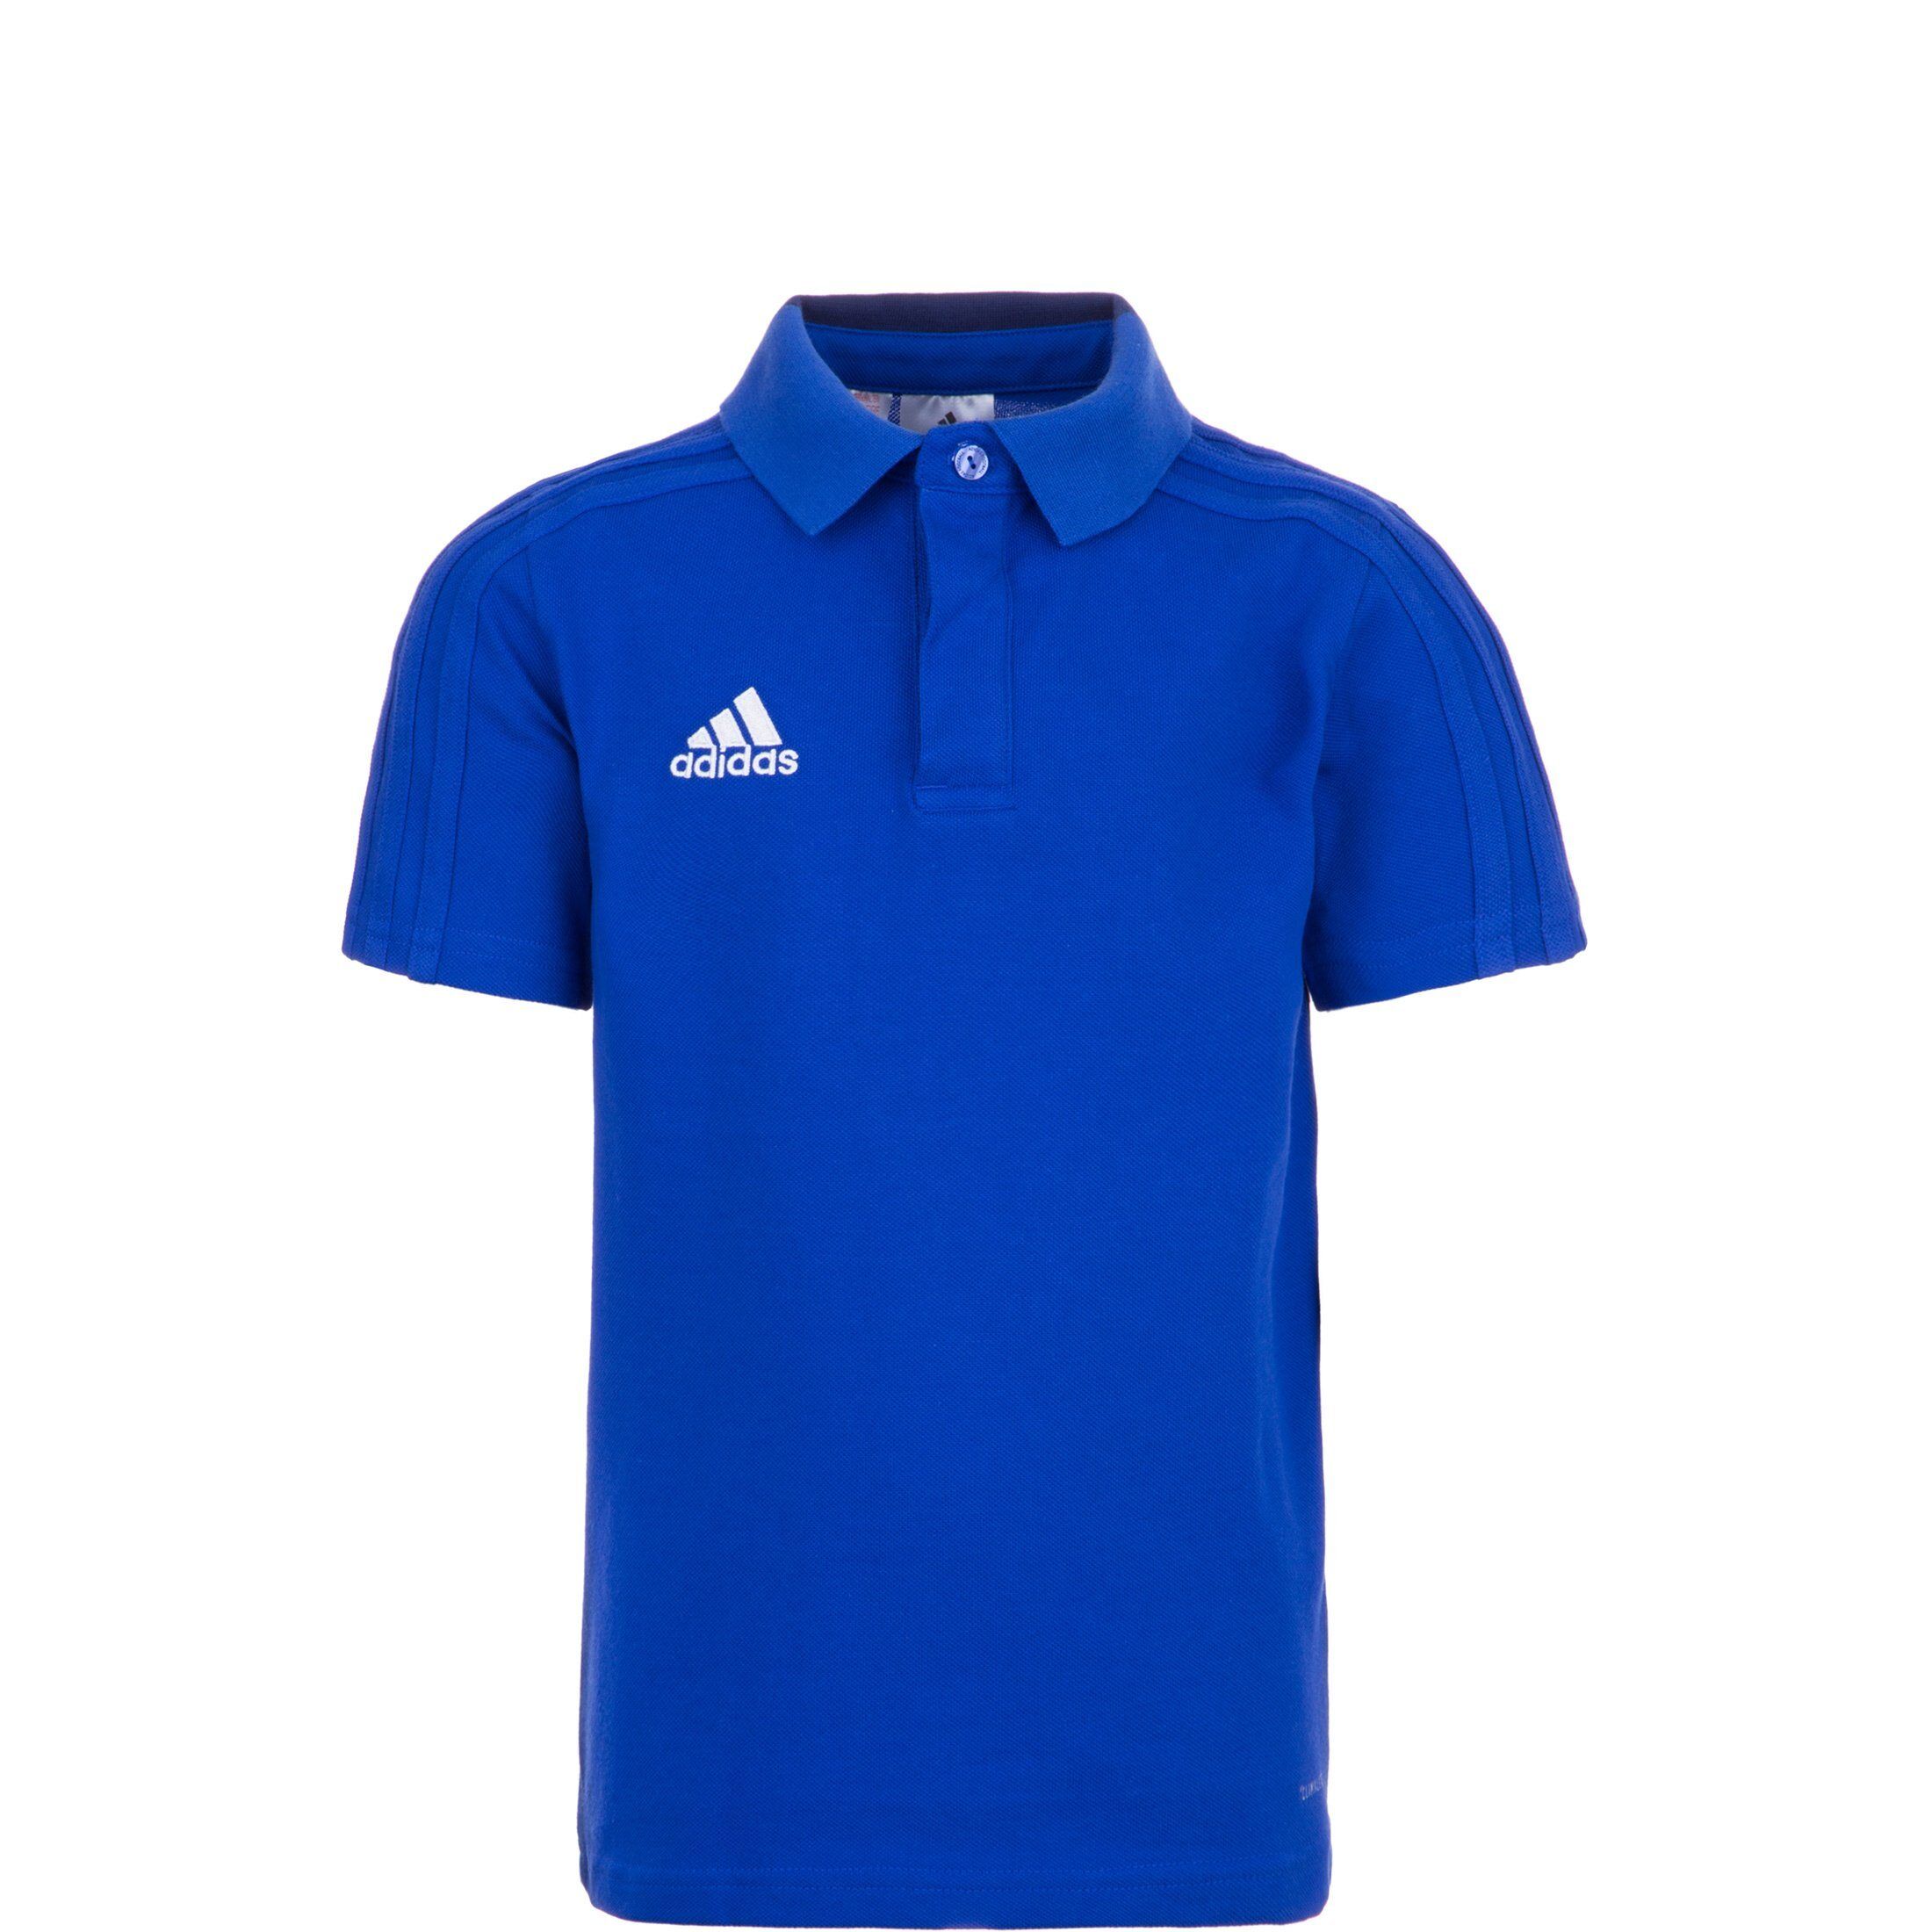 Adidas Performance Poloshirt »Condivo 18«, bold blue / dark blue / white